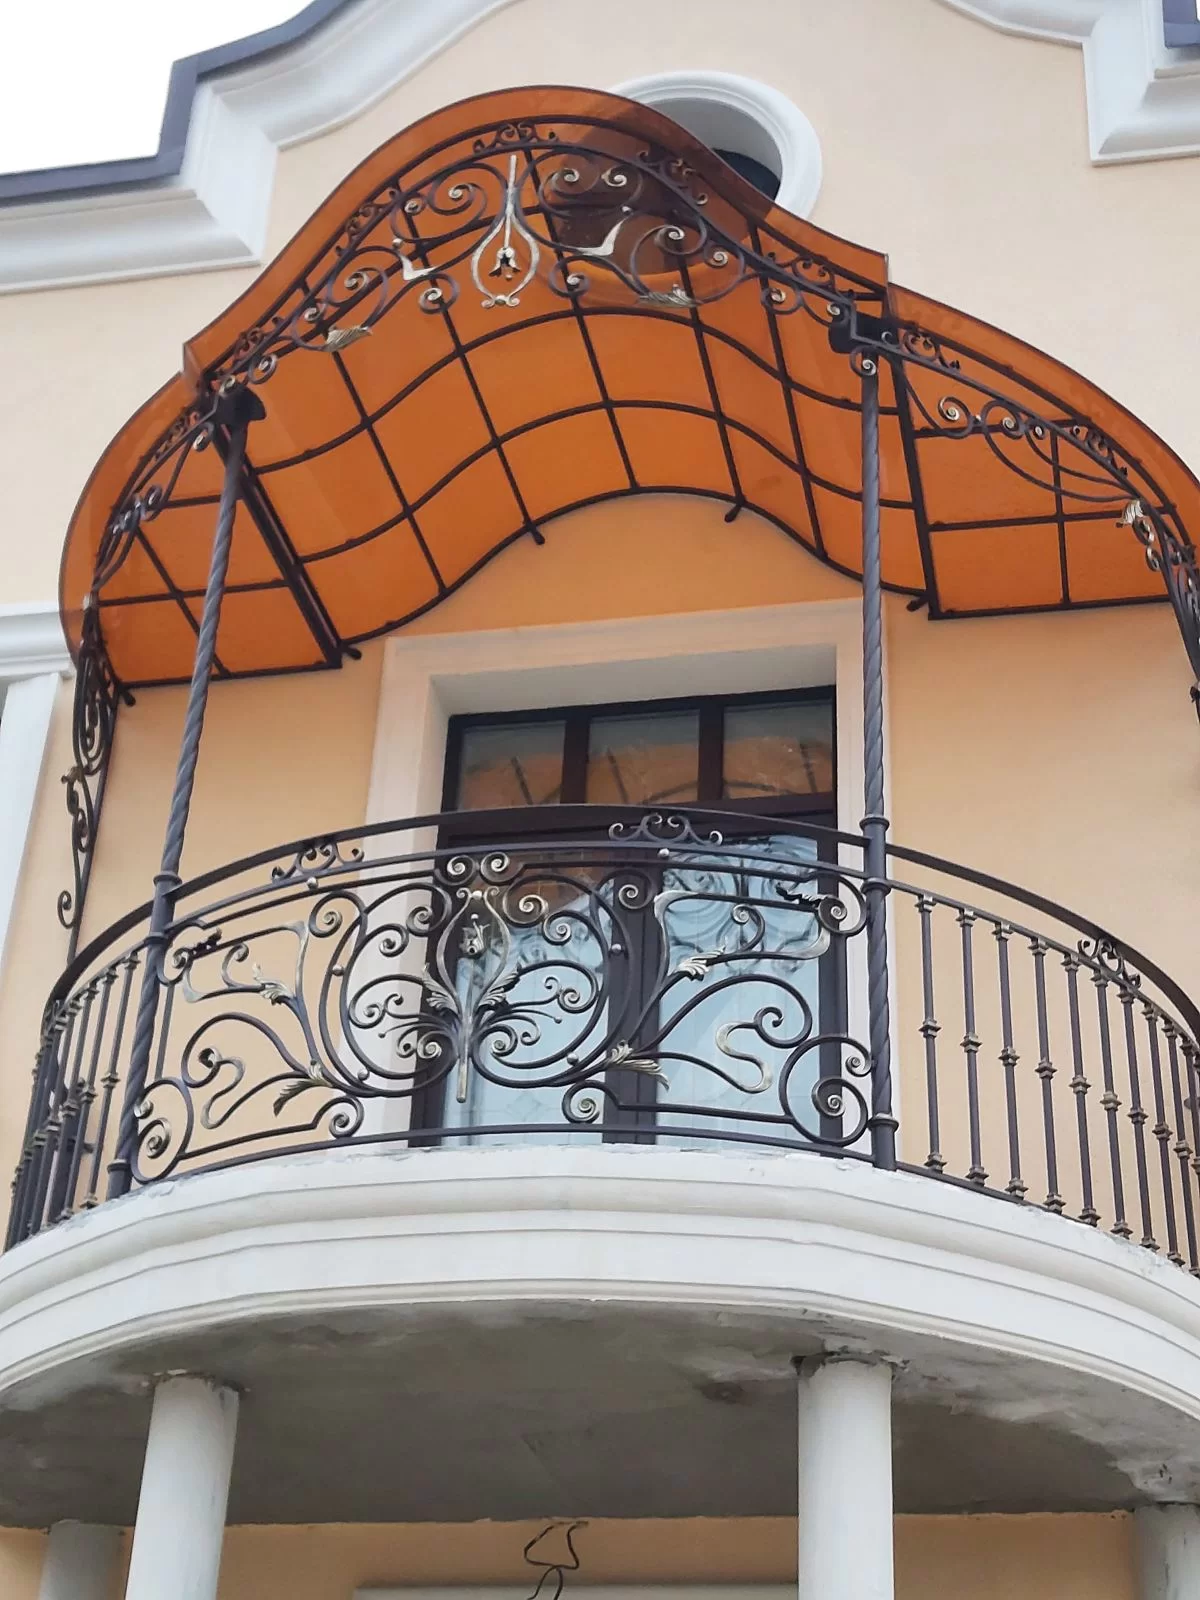 ковка балконов в Минске